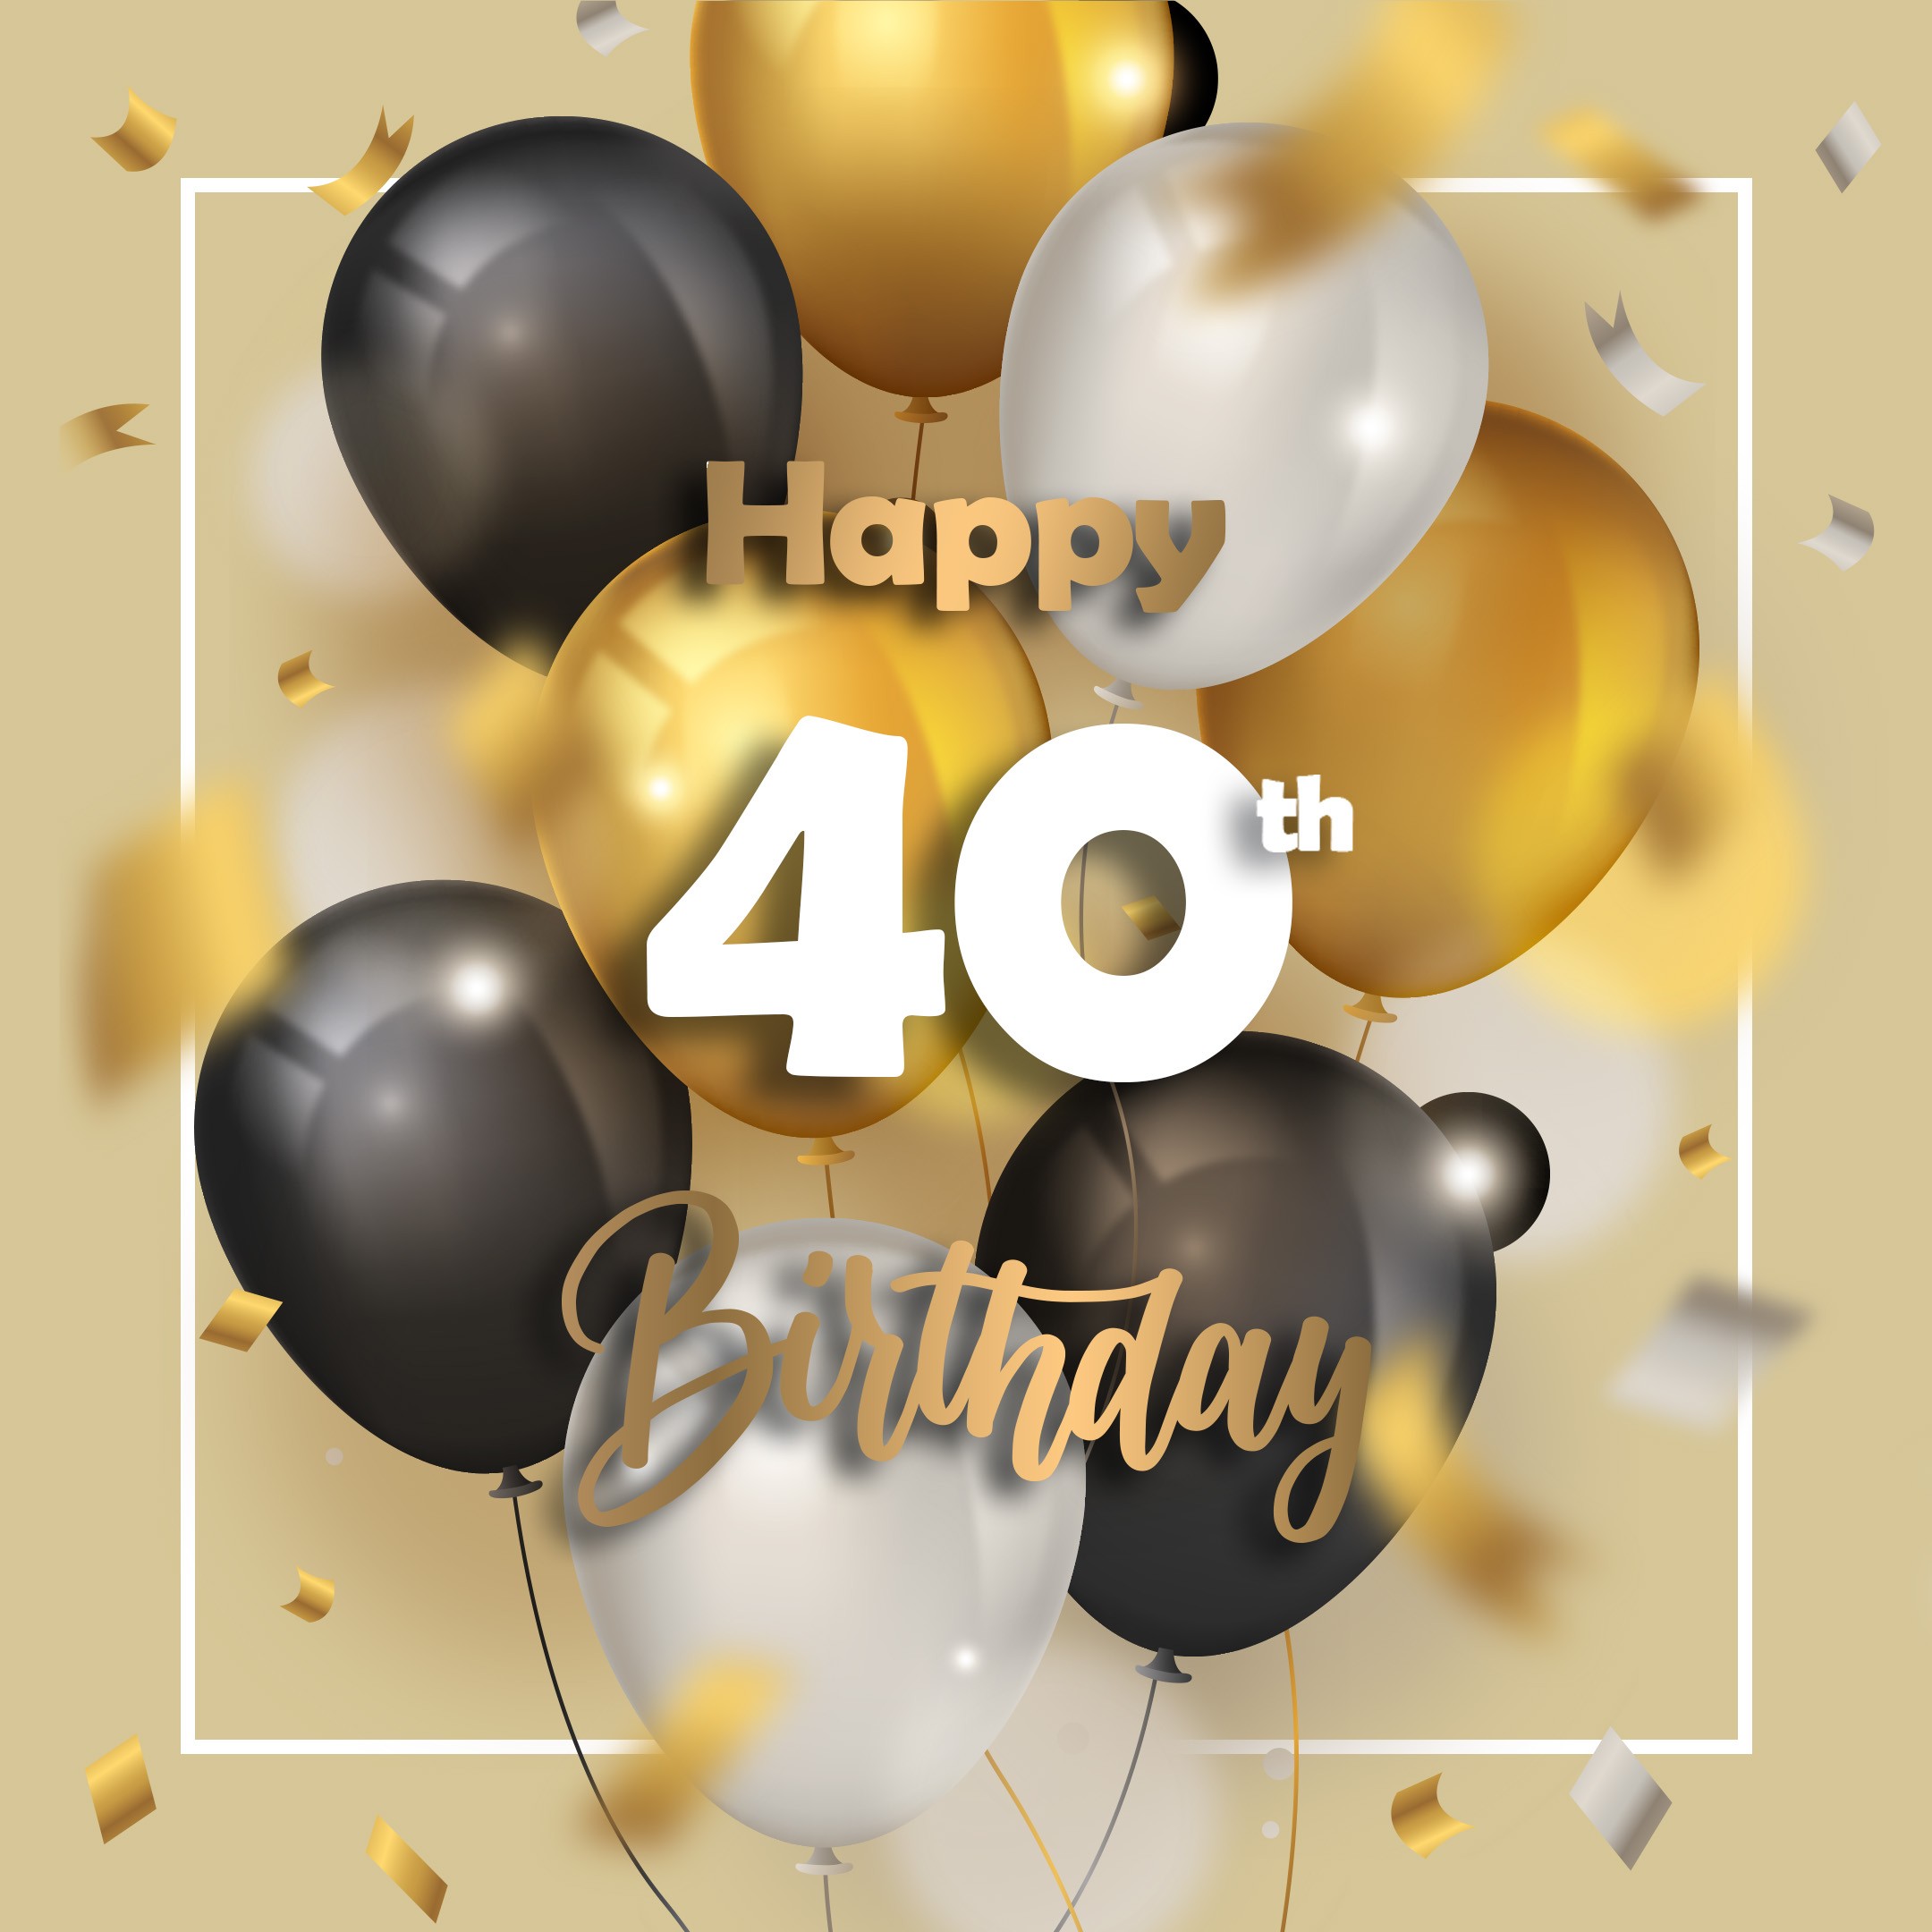 Free 40th Years Happy Birthday Image With Balloons - birthdayimg.com